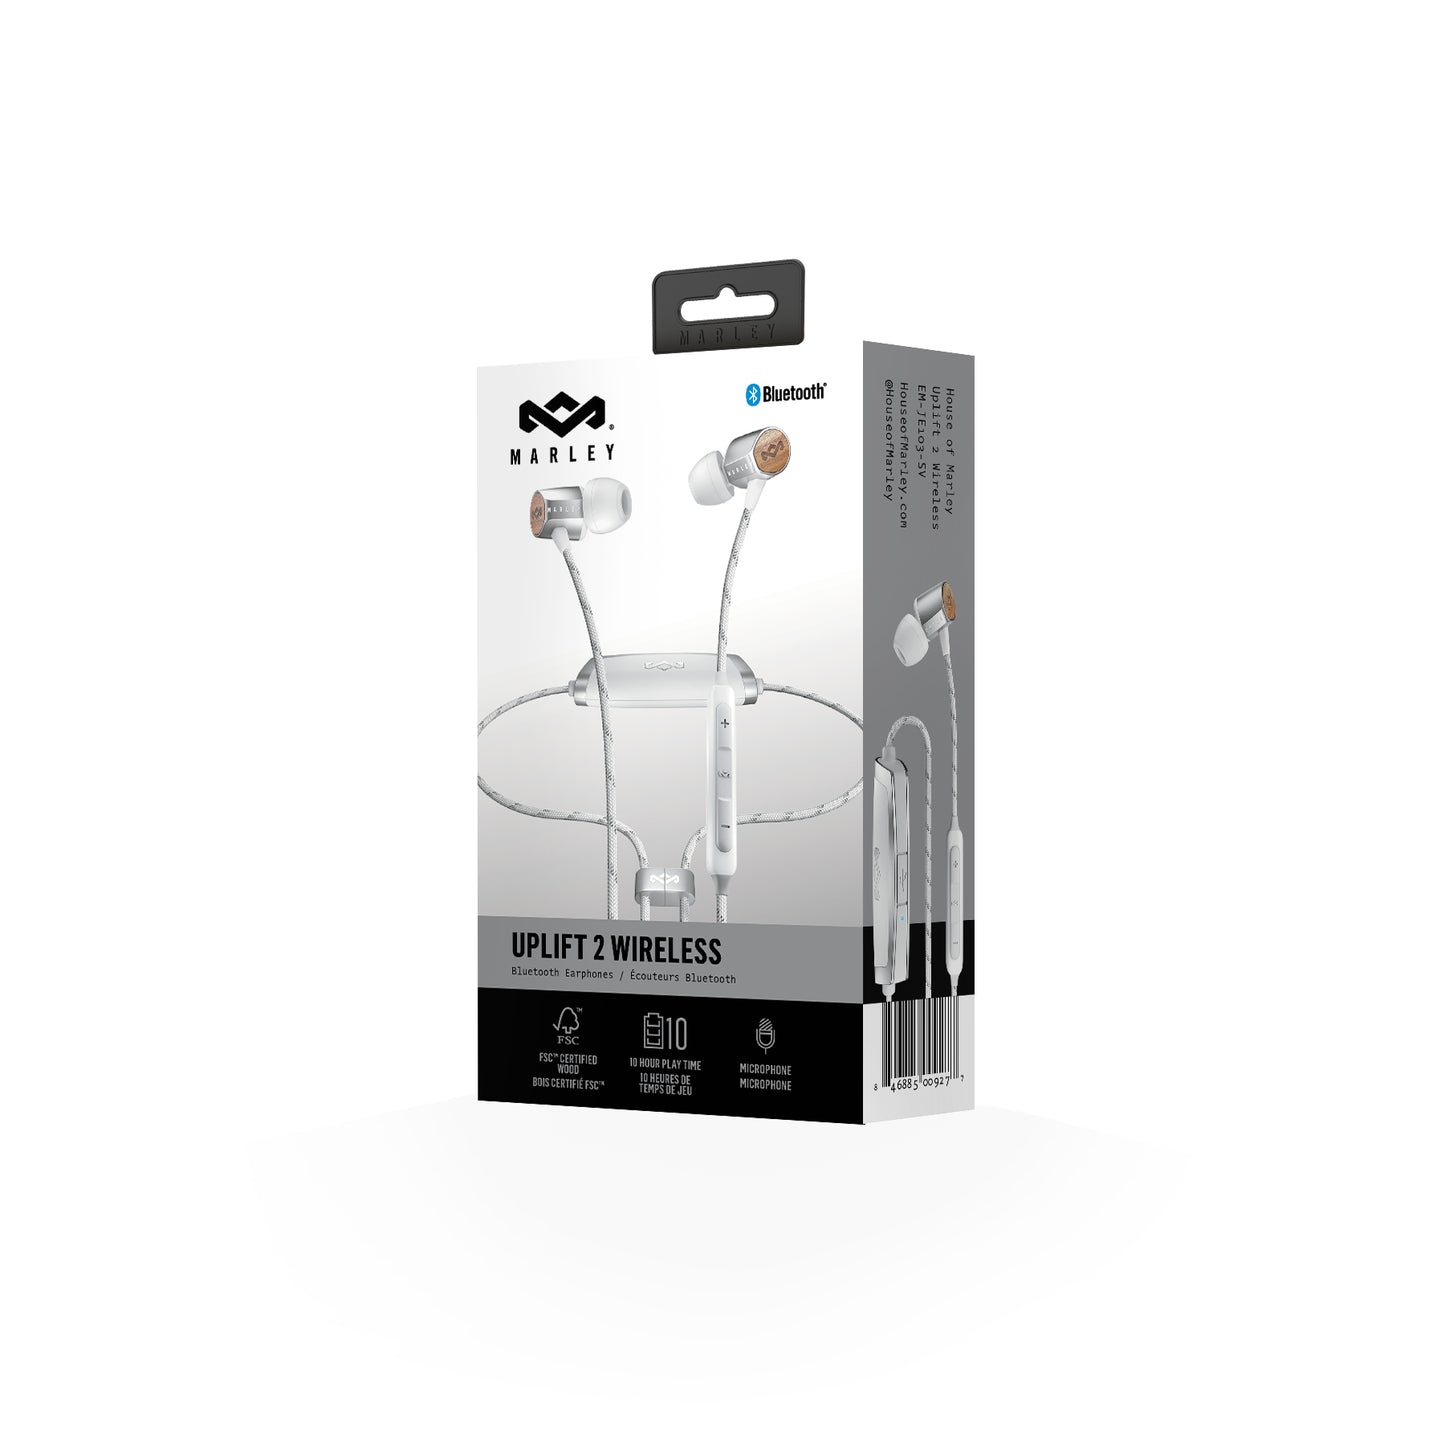 Uplift 2 wireless wireless headphones - silver | House of Marley